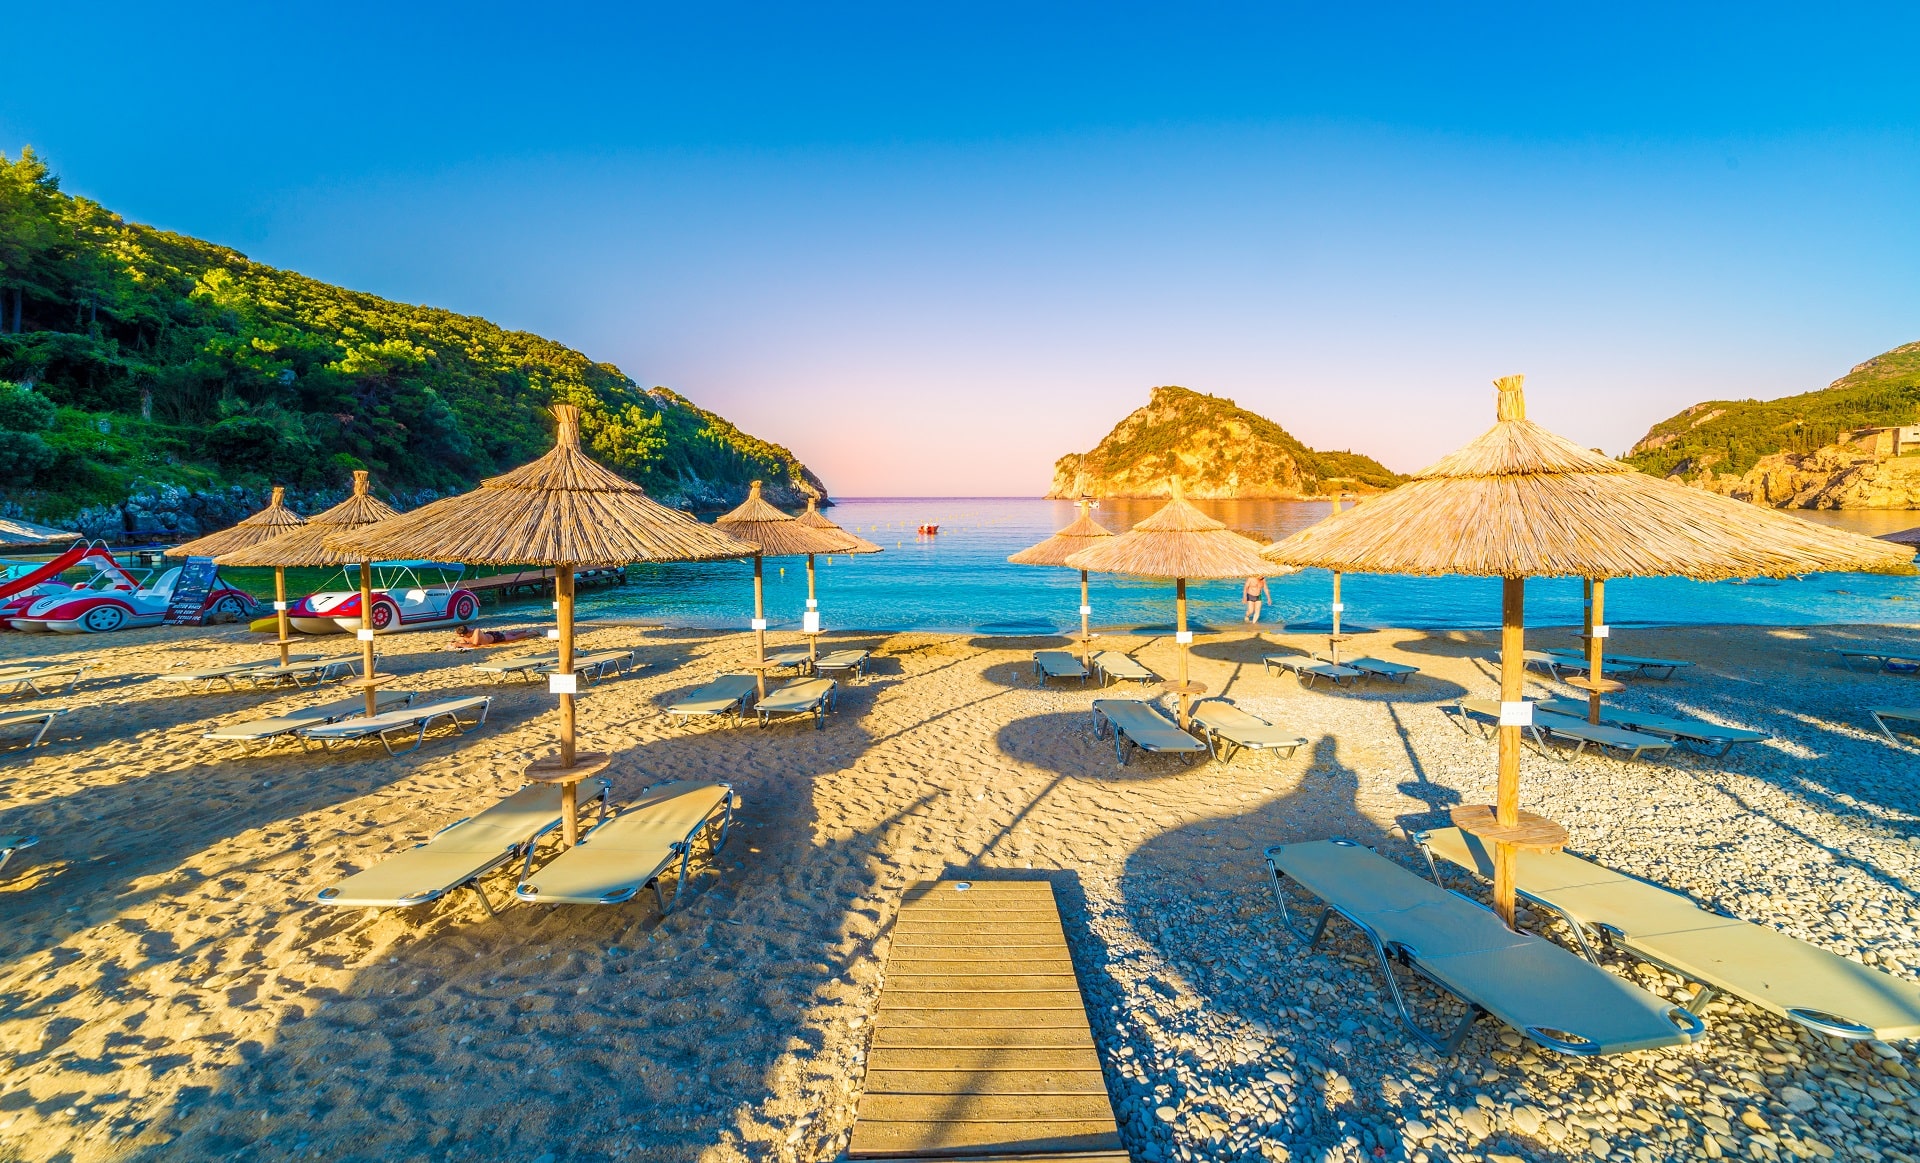 Beach, chairs and umbrellas at sunrise in Paleokastritsa village, Corfu island, Greece